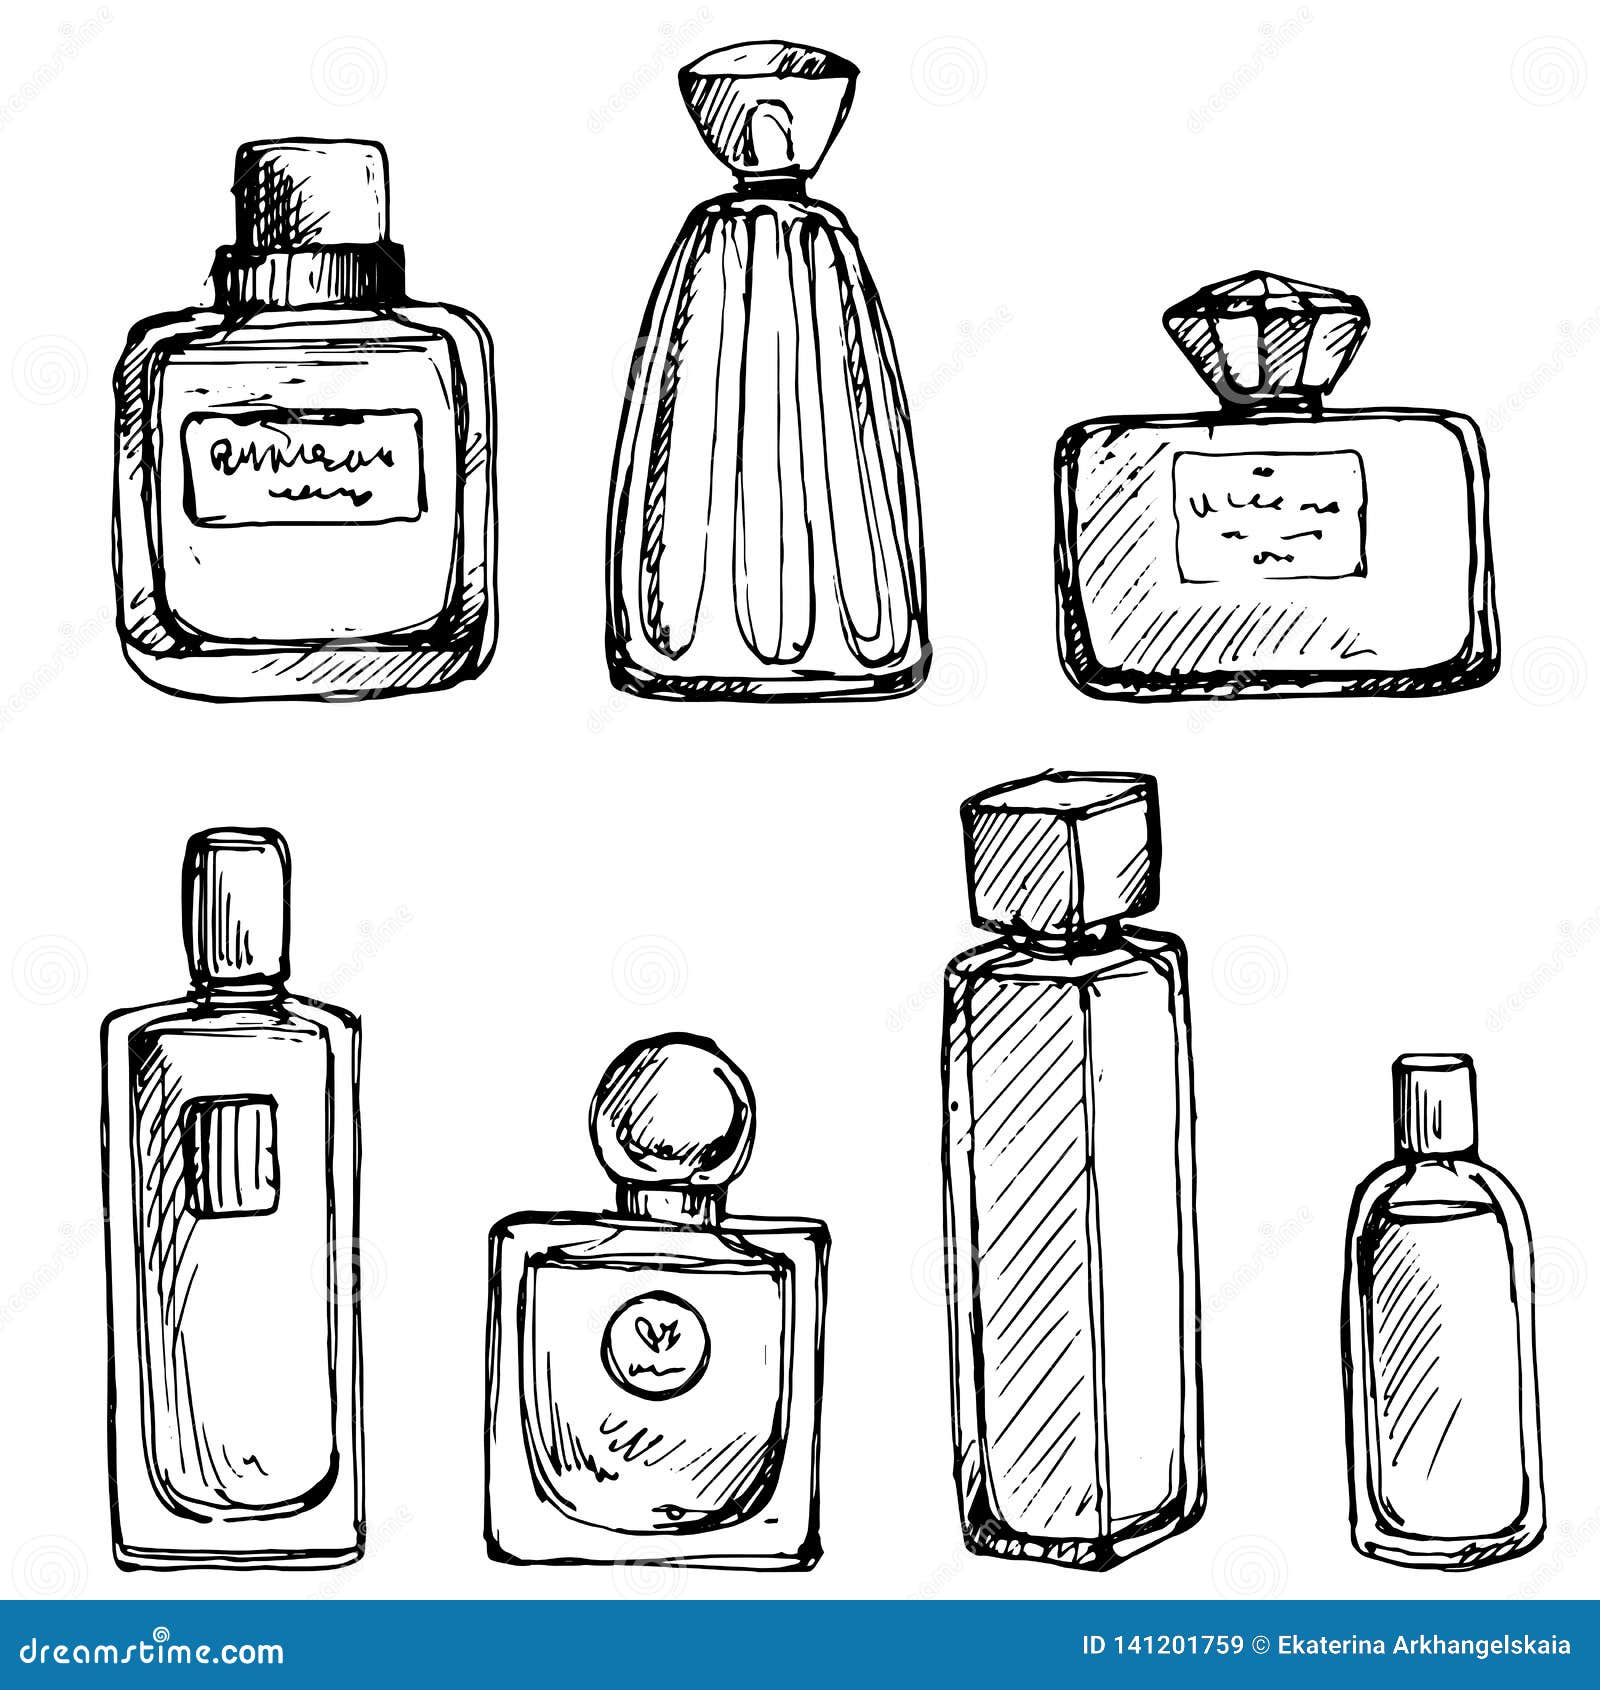 Vector Fashion Perfume Bottle Illustration. Hand Drawn Botanical Sketch  Stock Vector - Illustration of beauty, background: 203502598